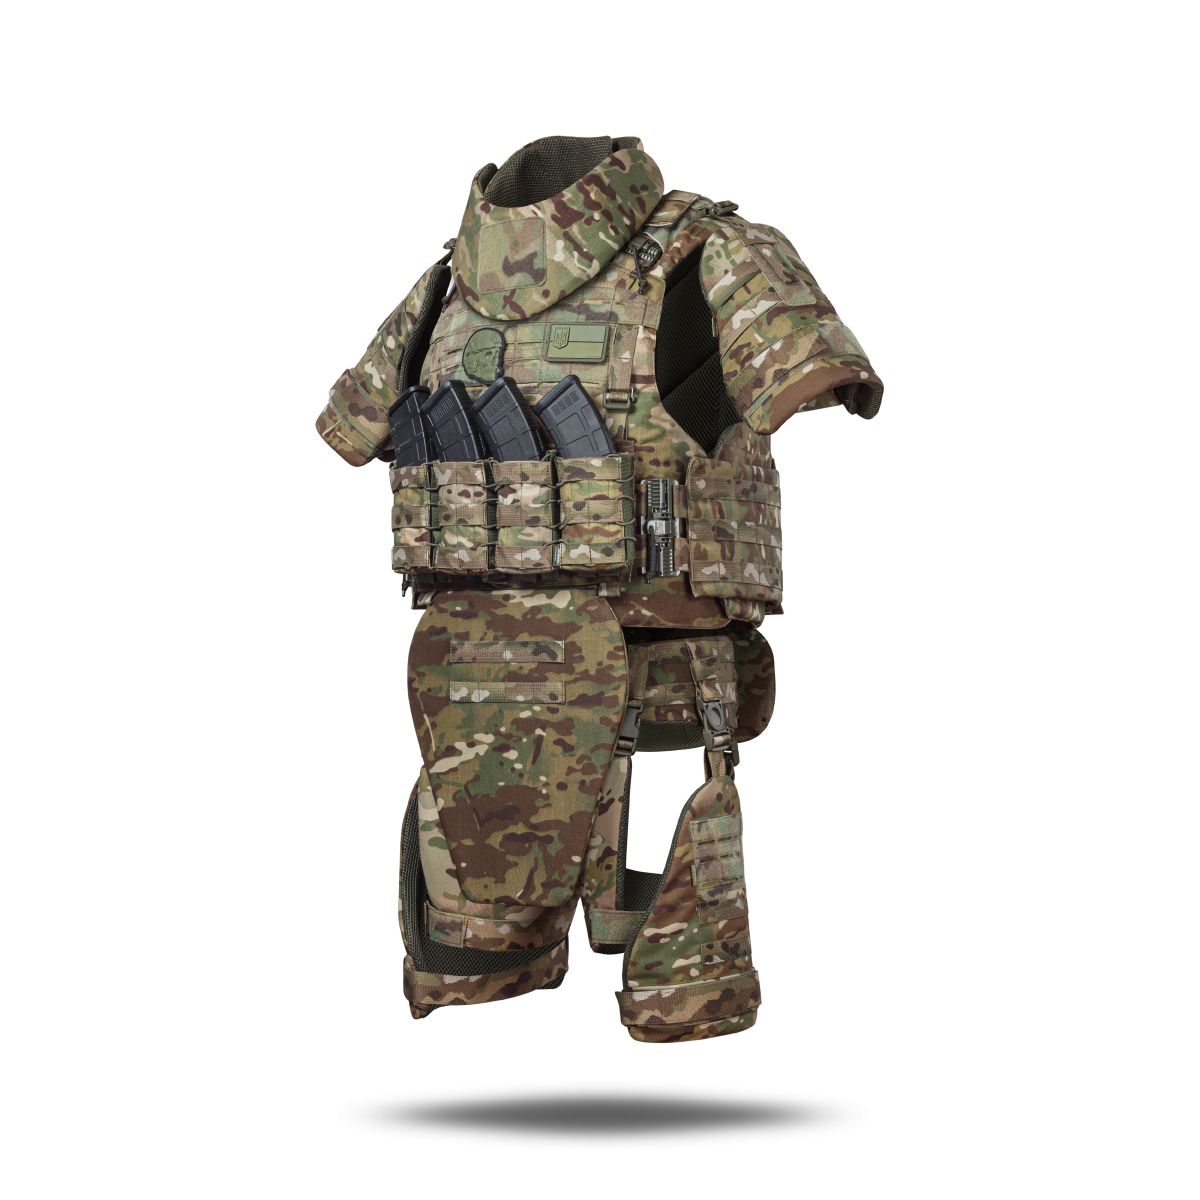 Бронекостюм A.T.A.S. (Advanced Tactical Armor Suit) Level I. Класс защиты – 1. Мультикам. S/M